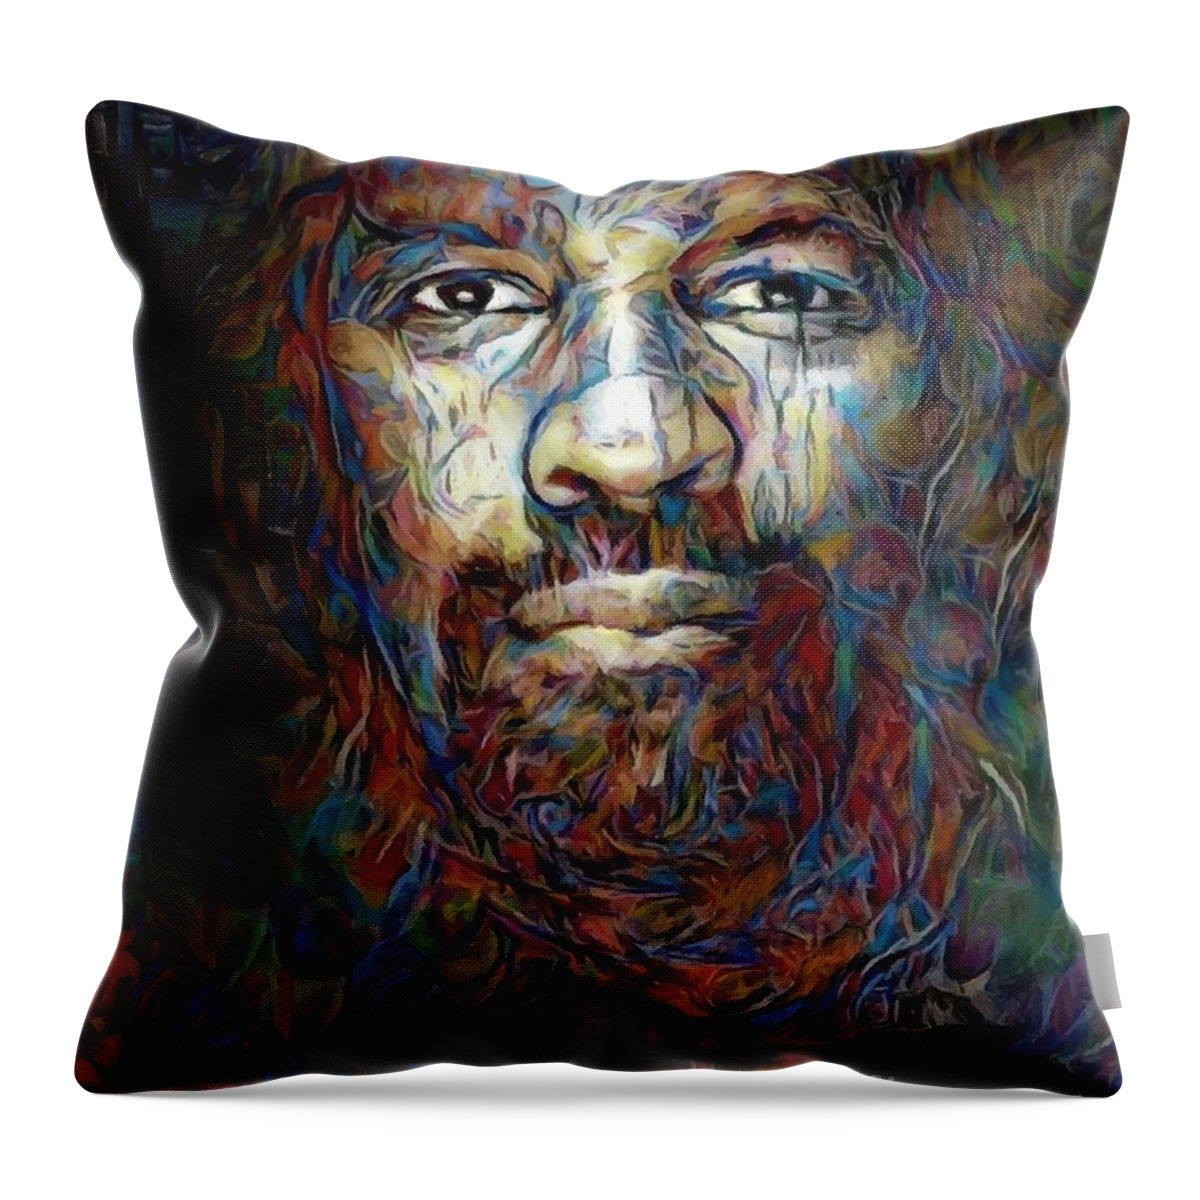 Denzel Washington Throw Pillow featuring the mixed media Denzel Washington by Carl Gouveia